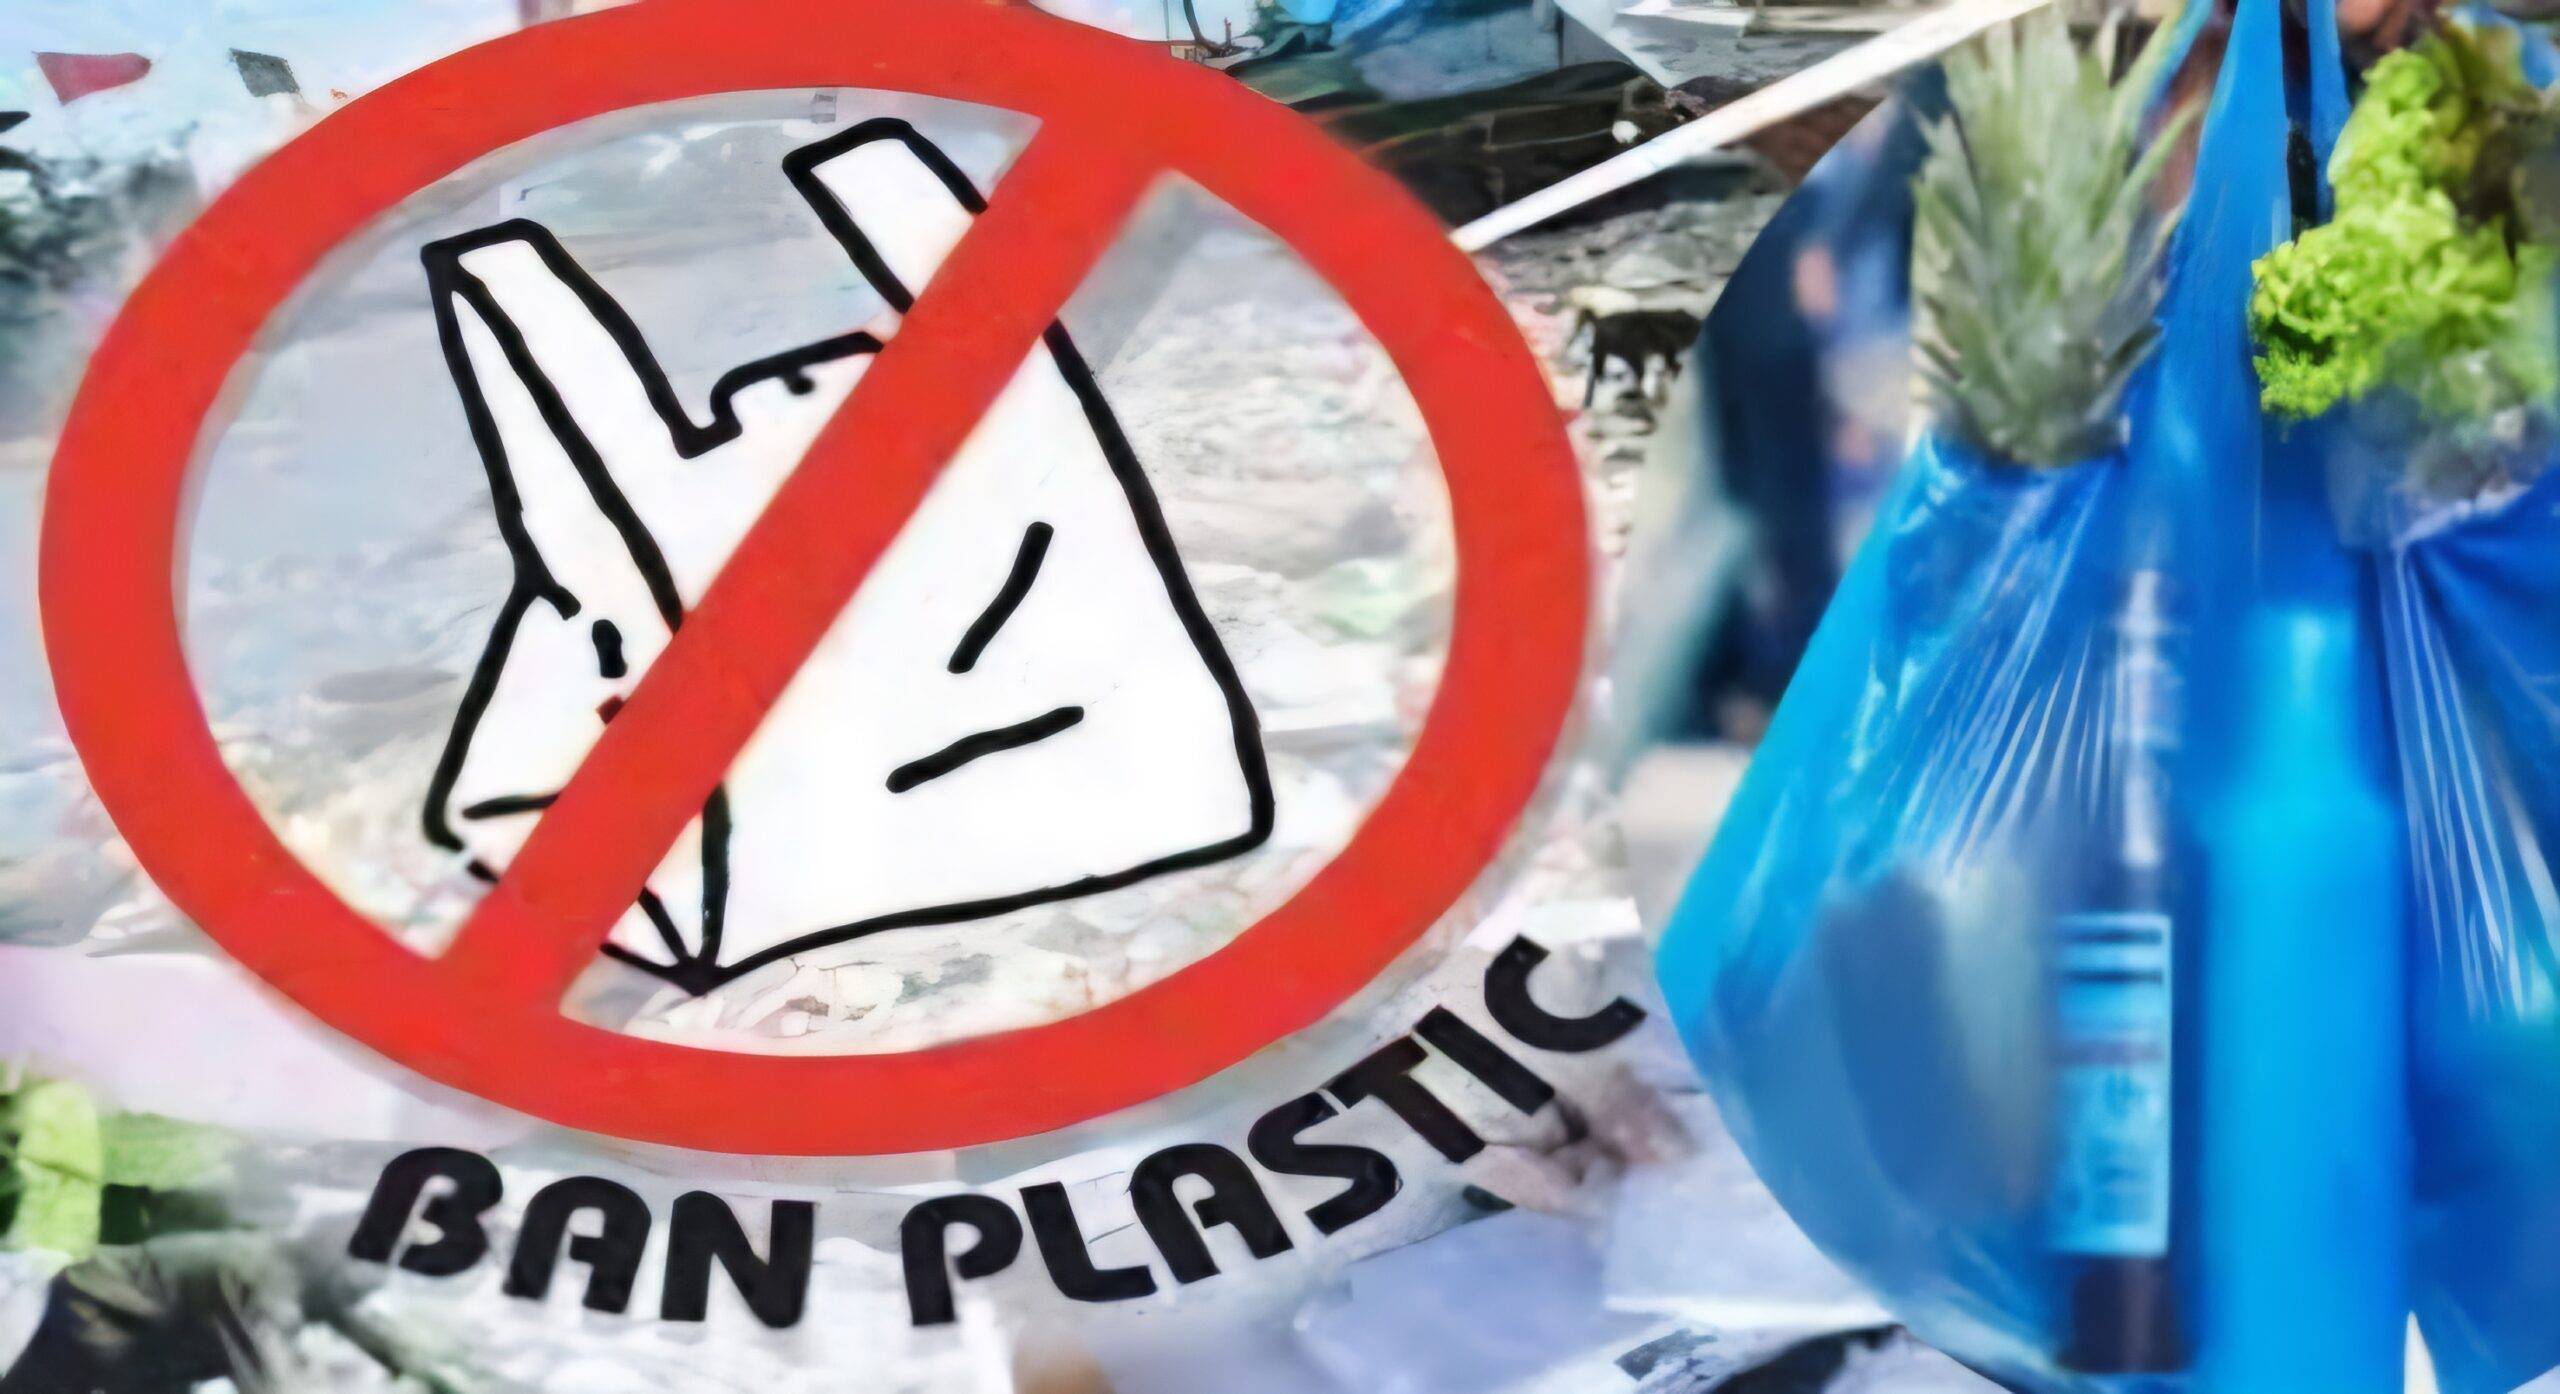 Plastic ban scaled